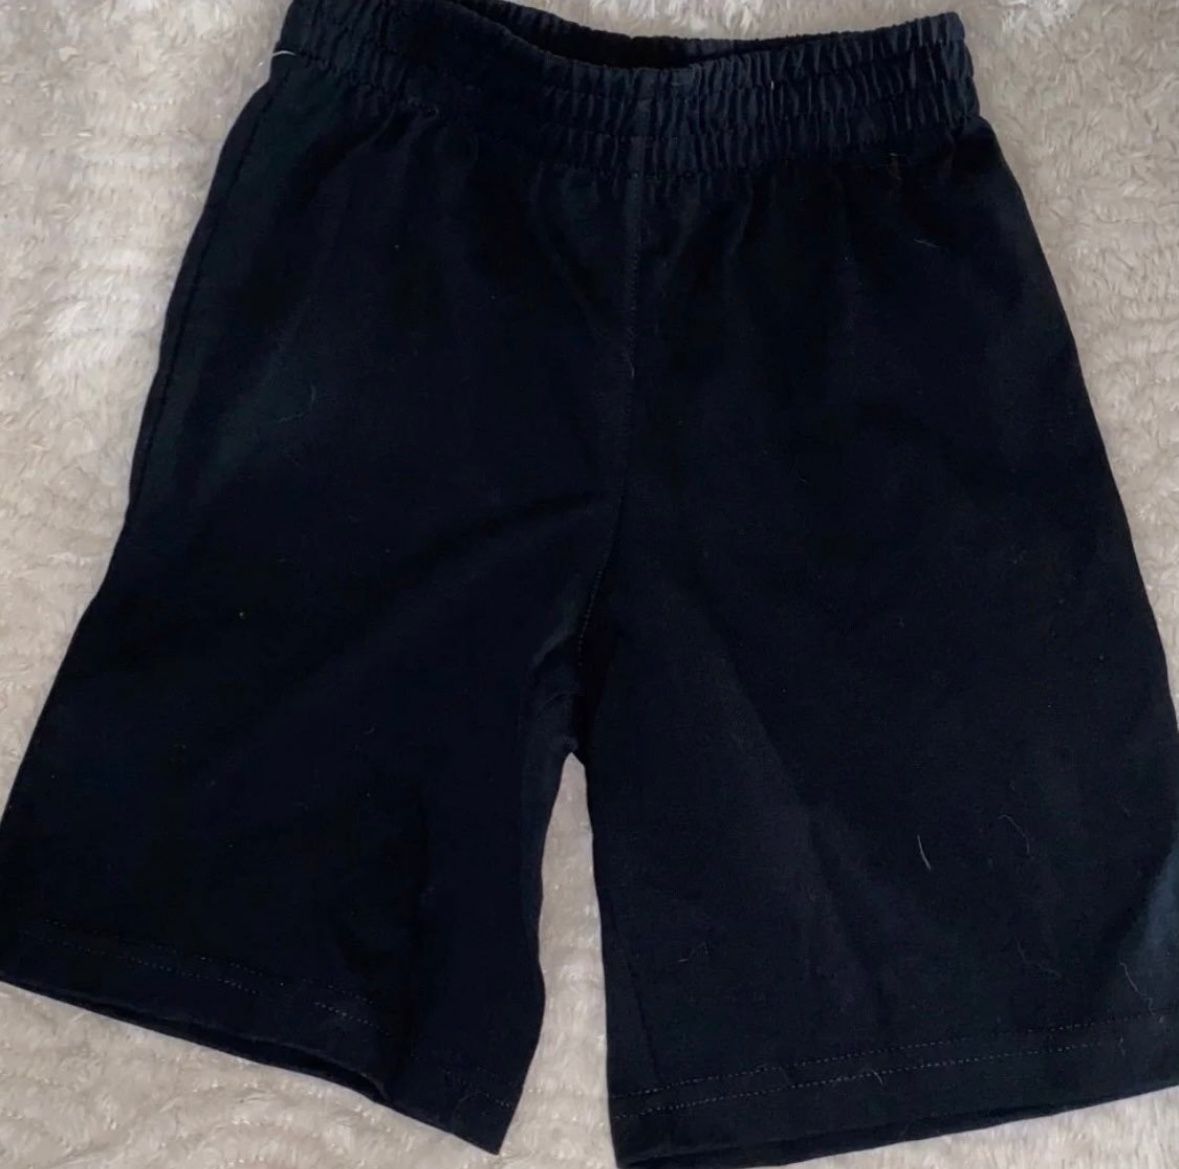 New Todder Boys 5T Black Knit Shorts